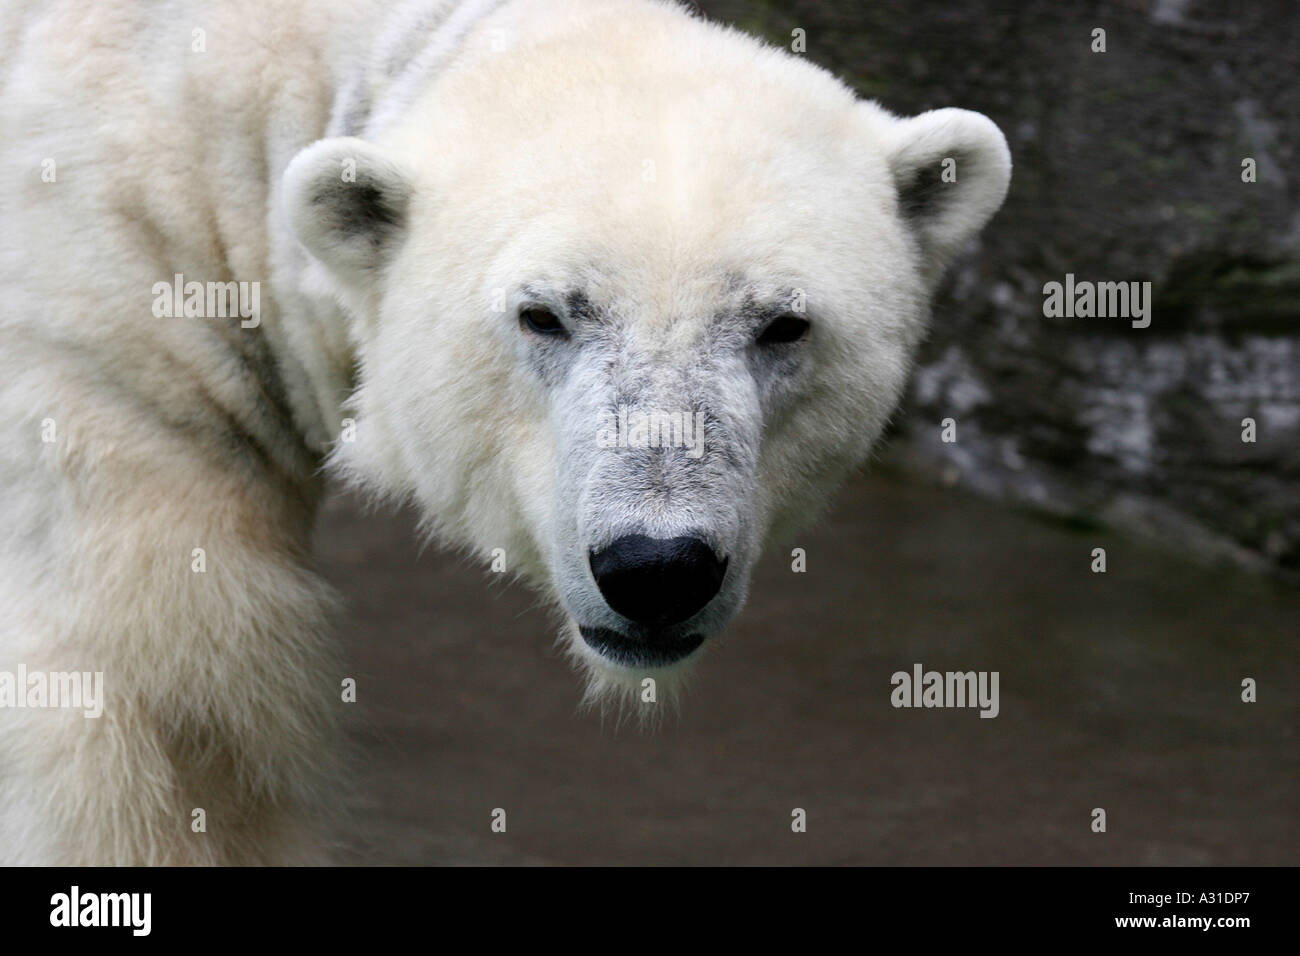 A polar bear facing the camera near water Stock Photo